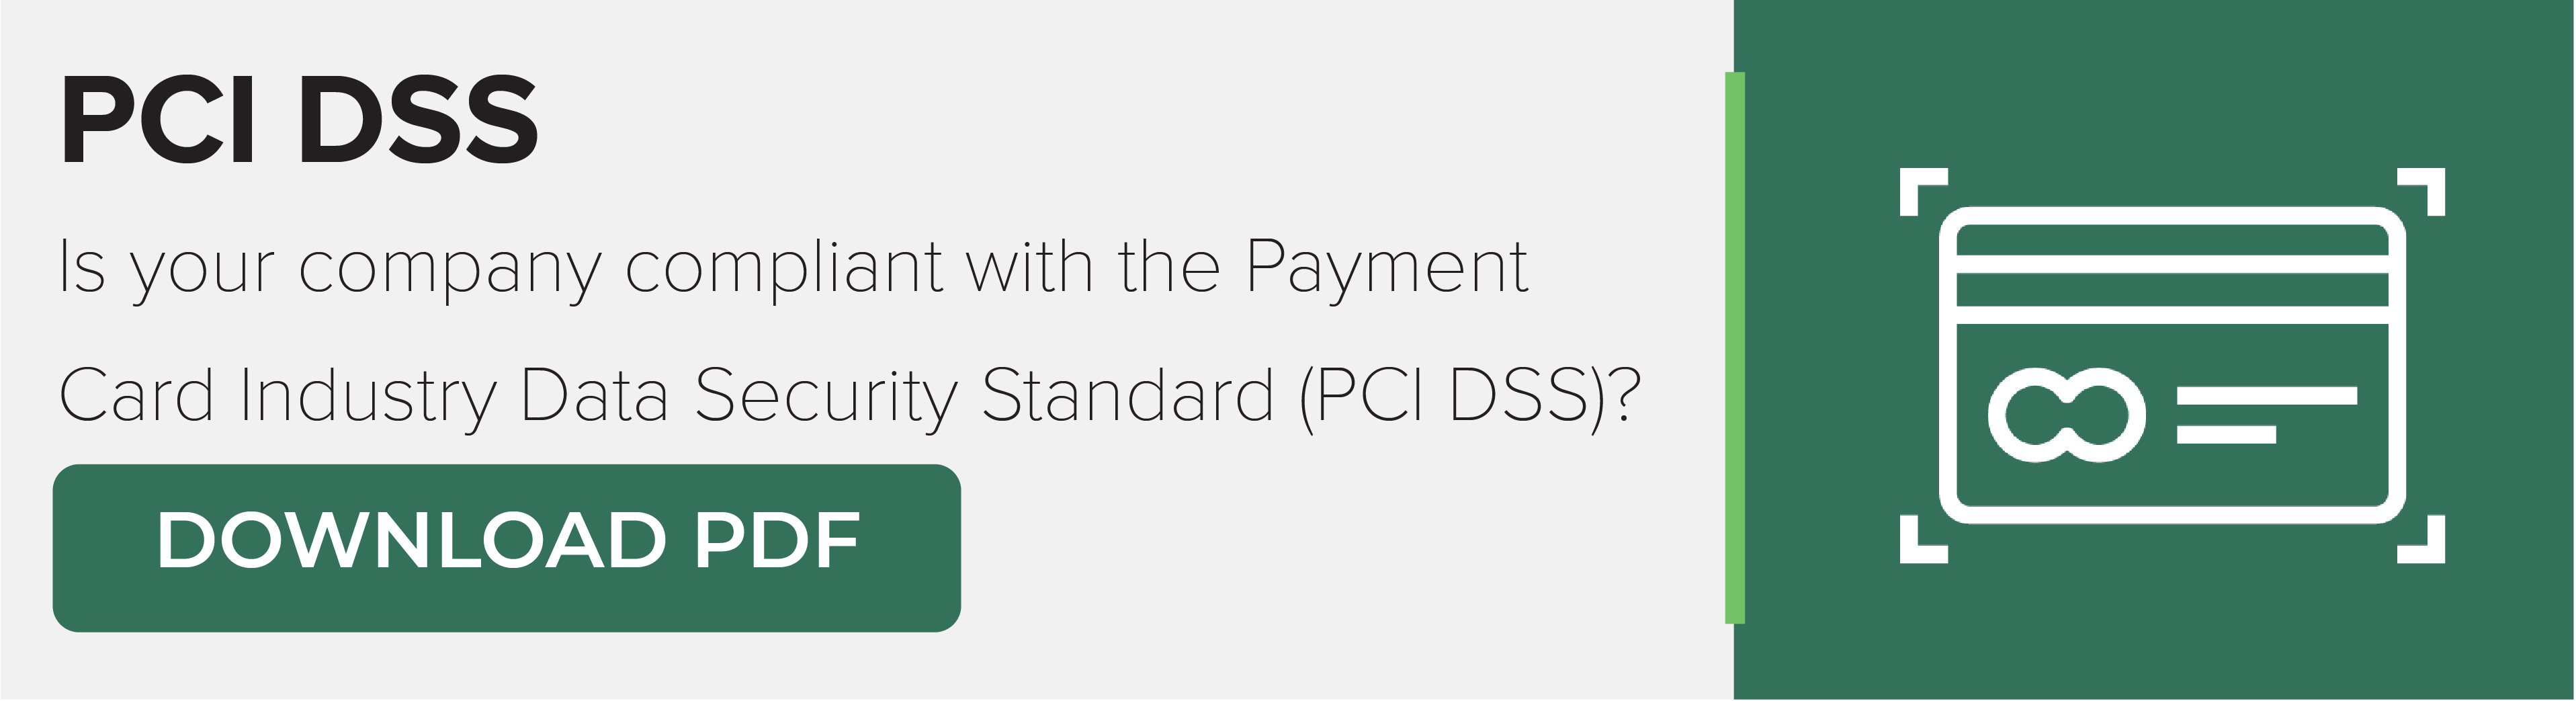 PCI DSS Download Button